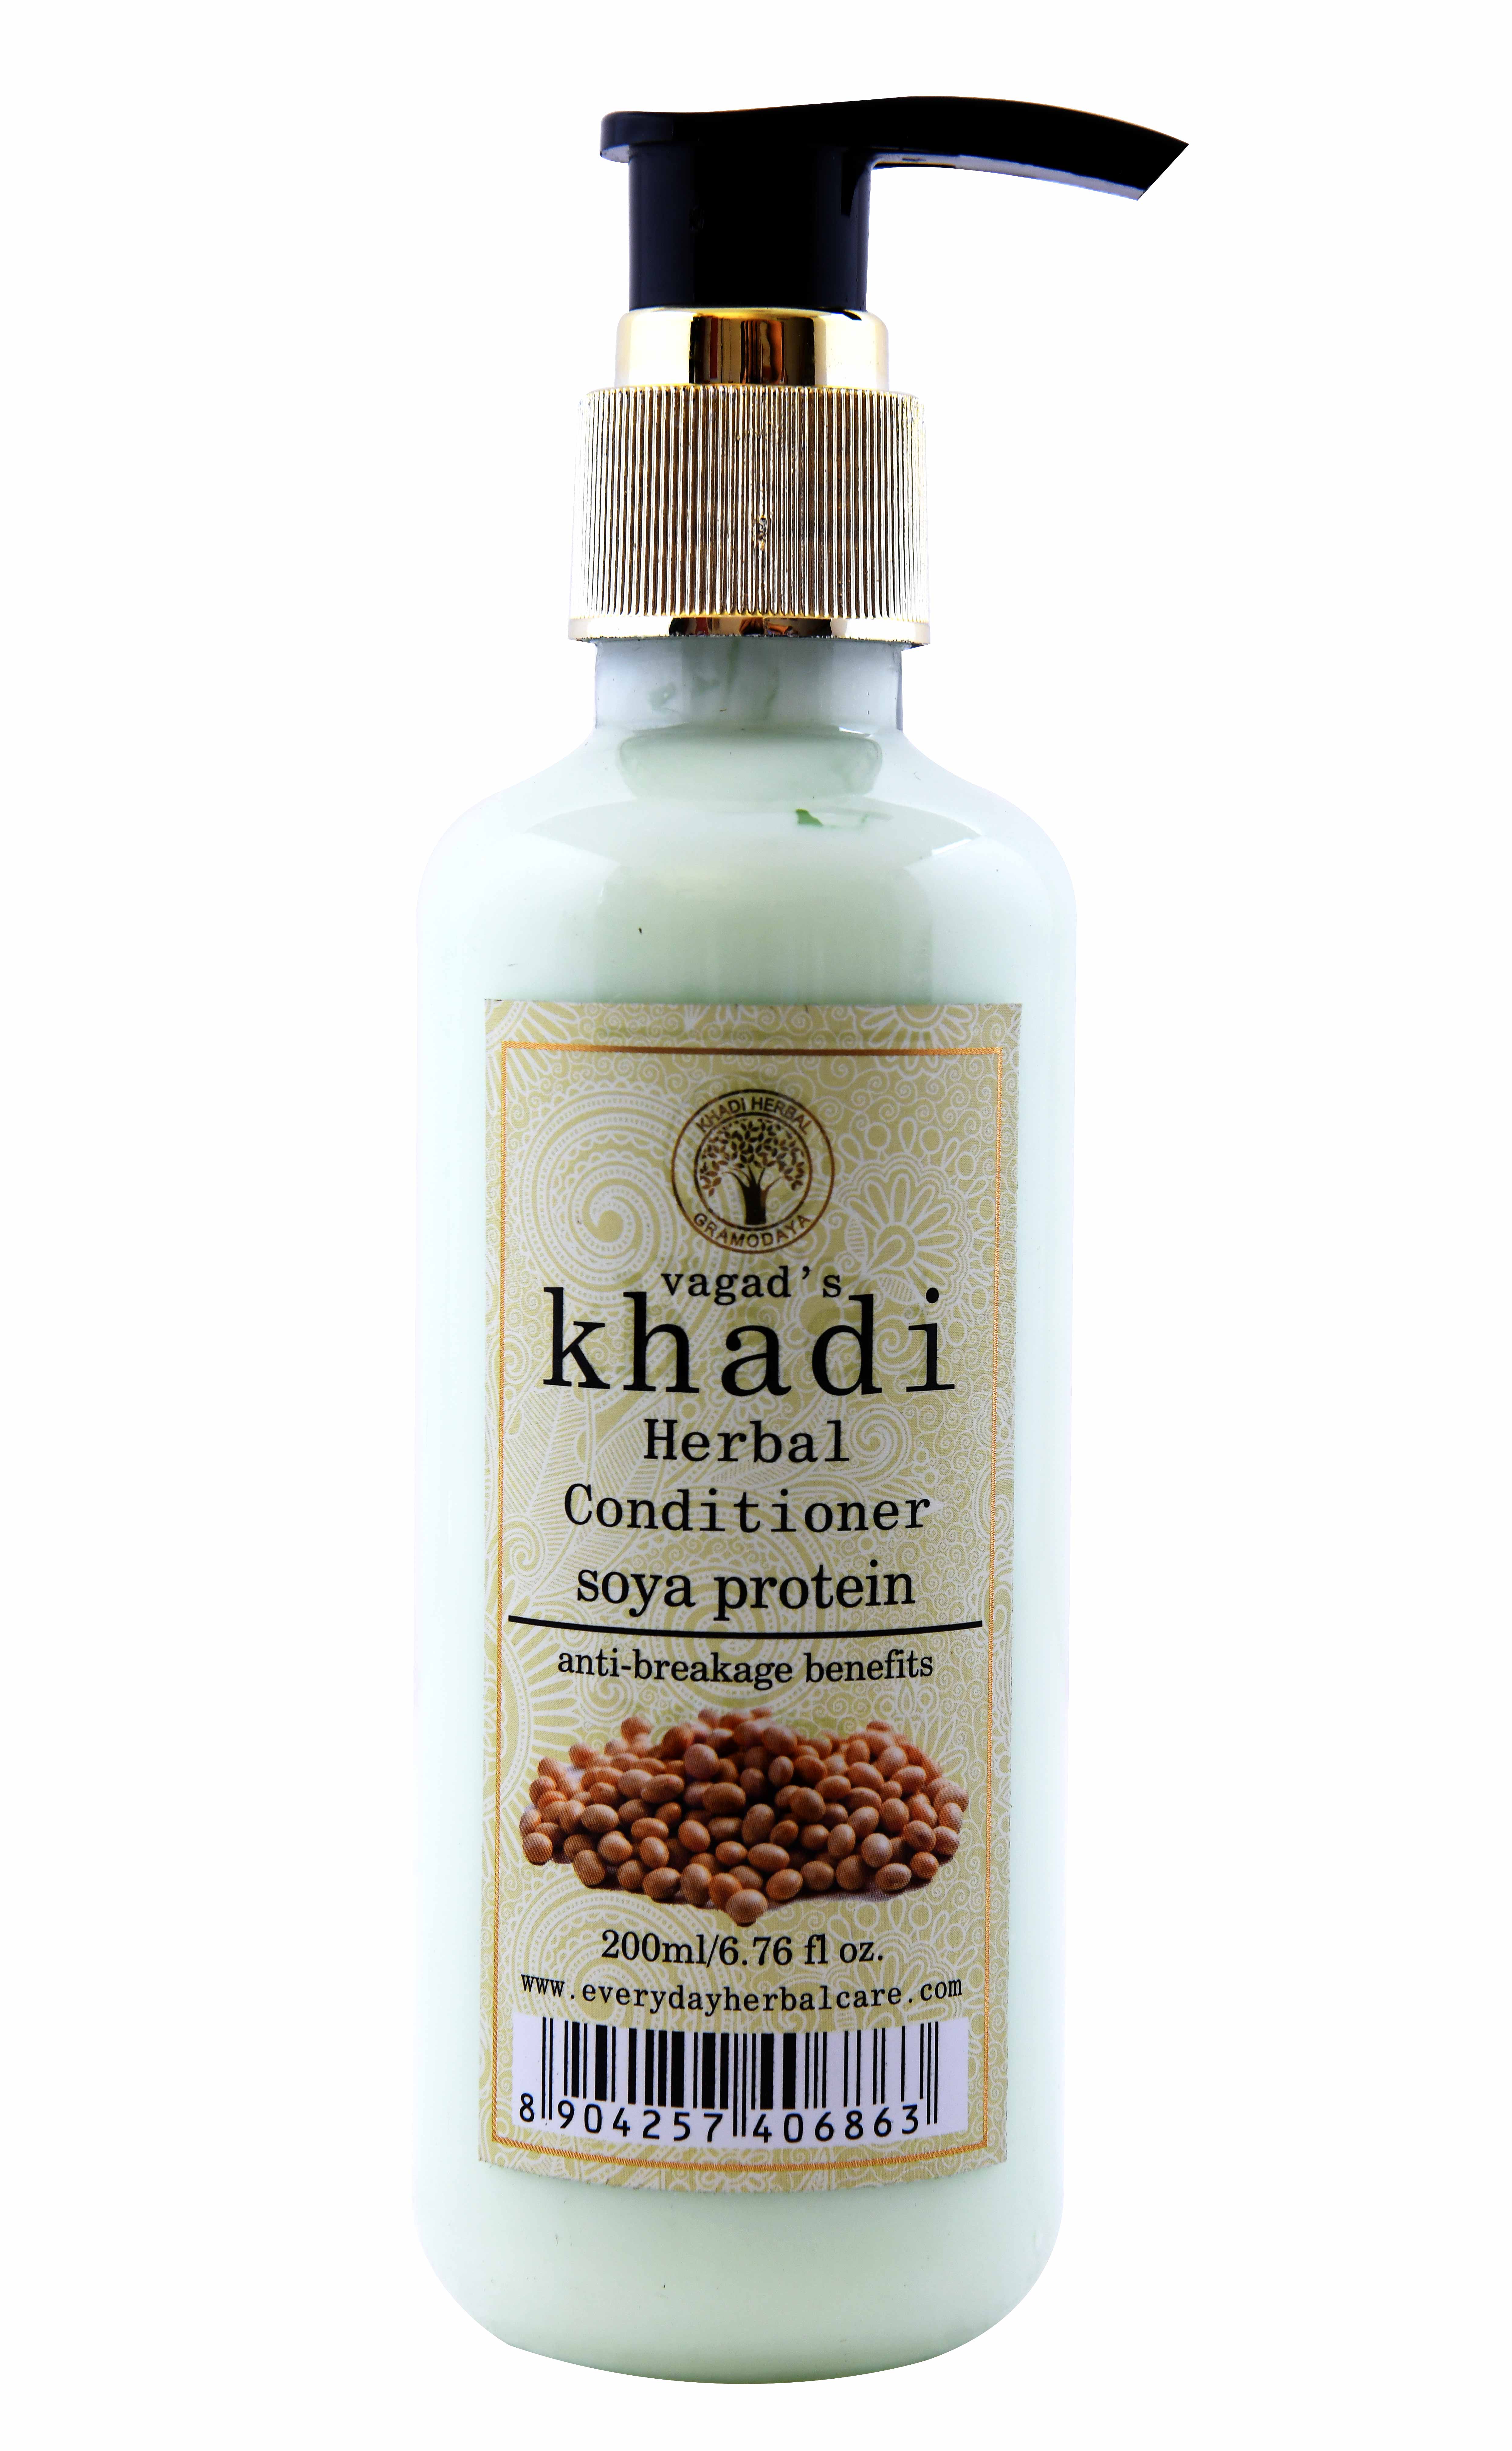 Buy Vagad's Khadi Soya Protein Conditioner at Best Price Online